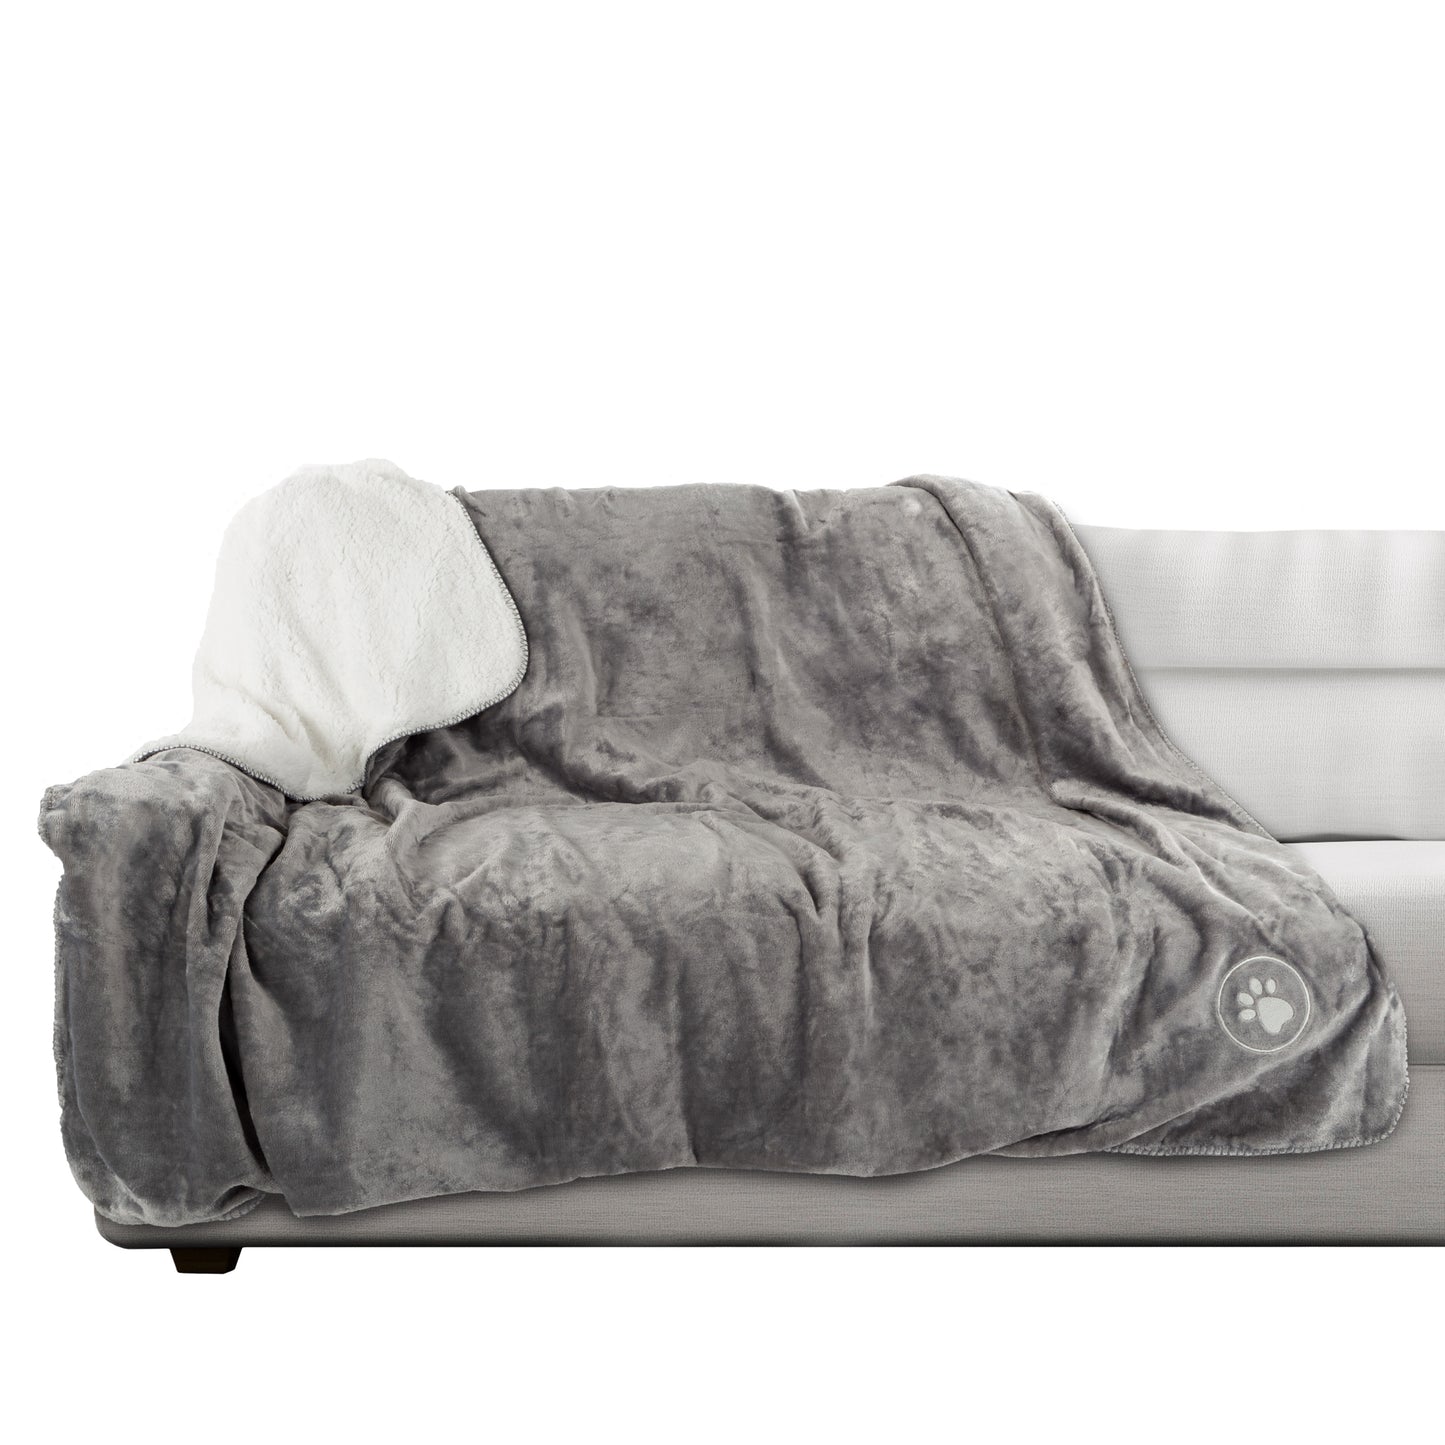 PETMAKER 60x70-Inch Waterproof Dog Blanket, Gray